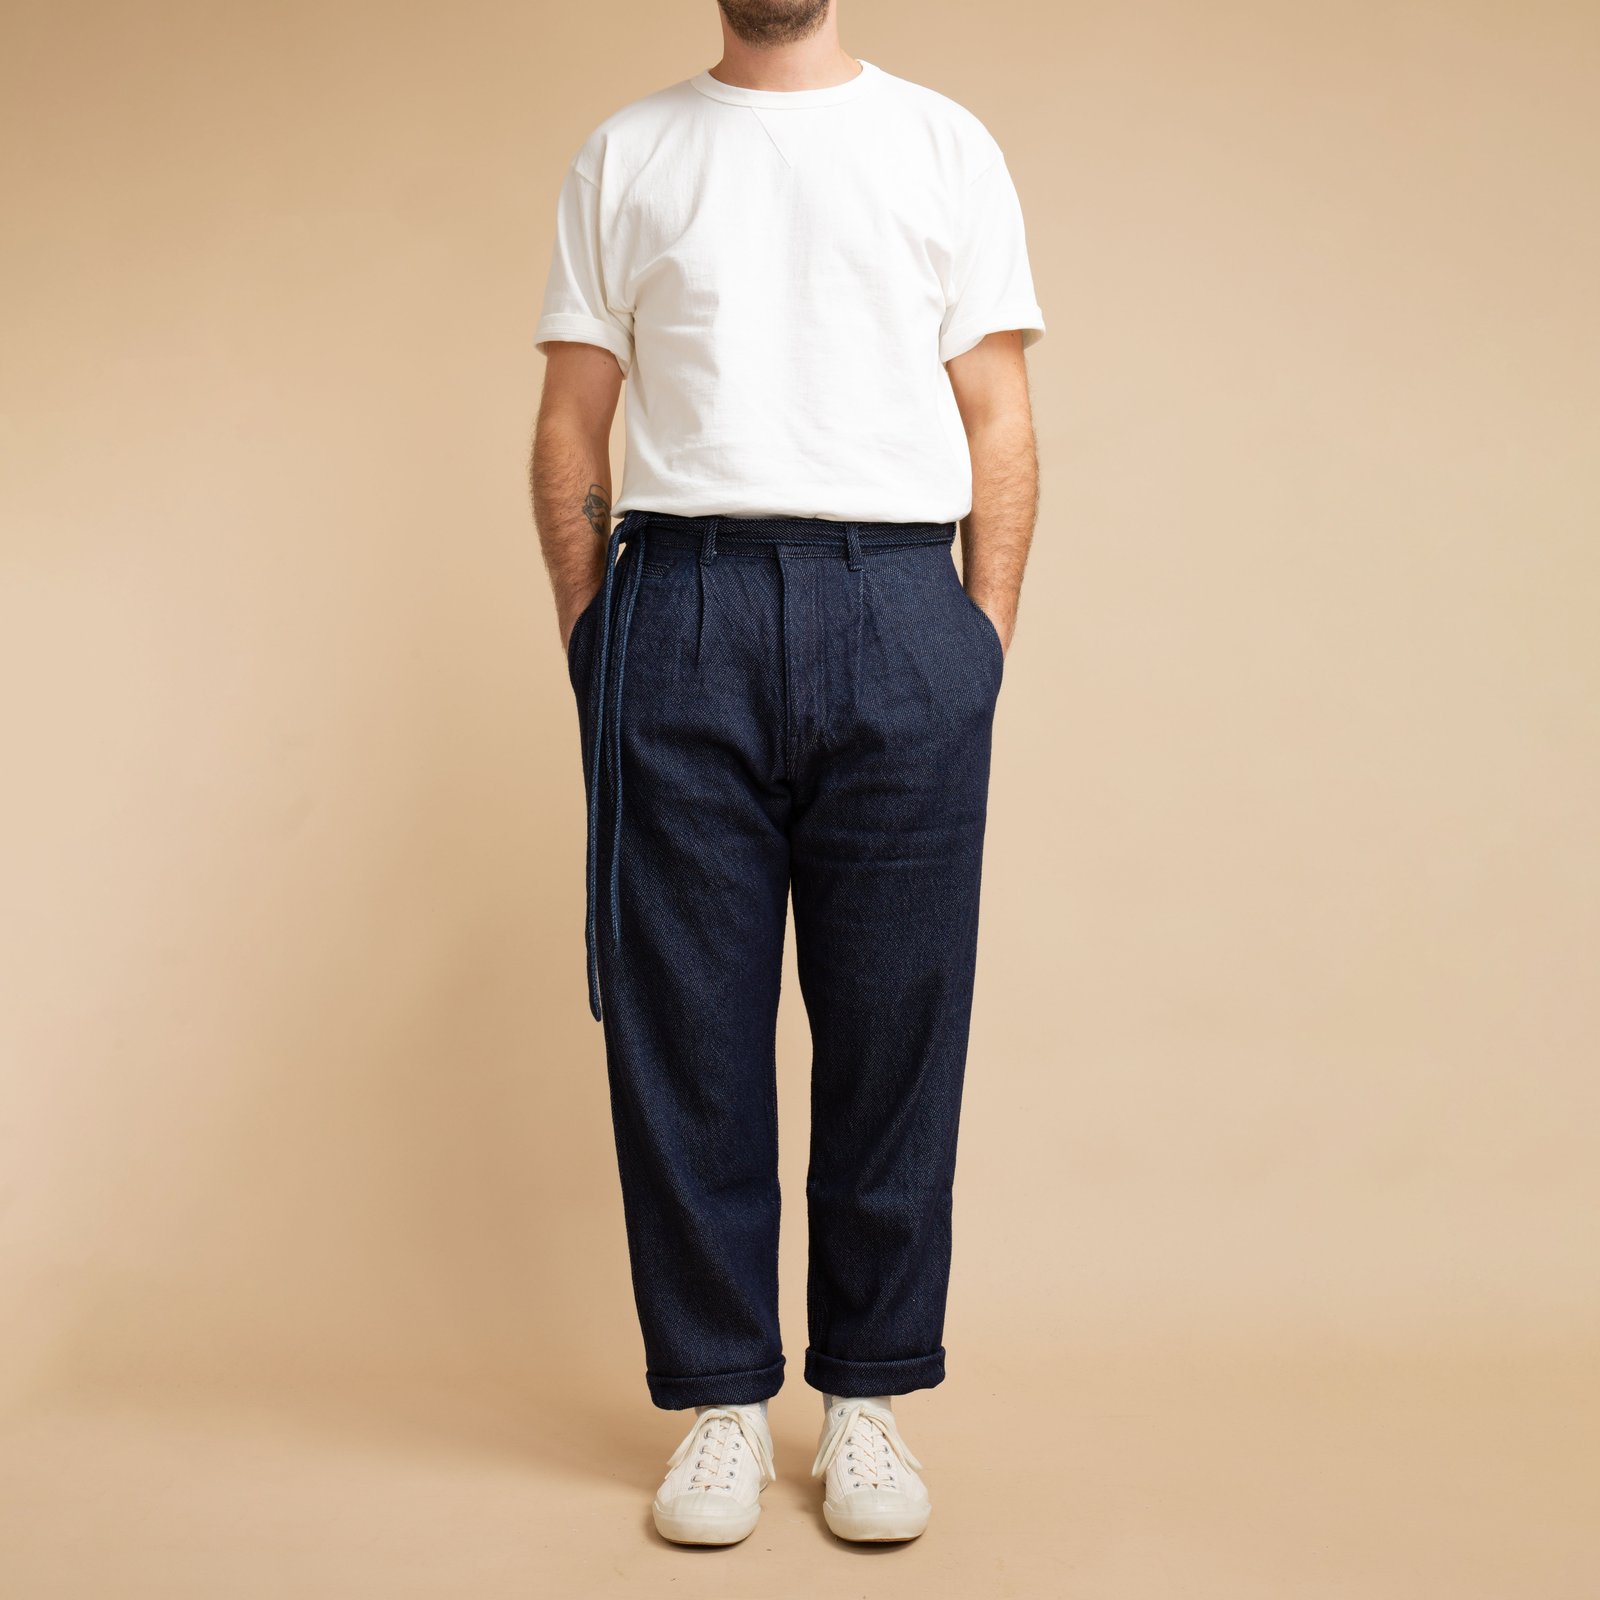 MOMOTARO X FLANEURS / FnM004 "Knit-Ish Denim" Original Fit Trousers Indigo